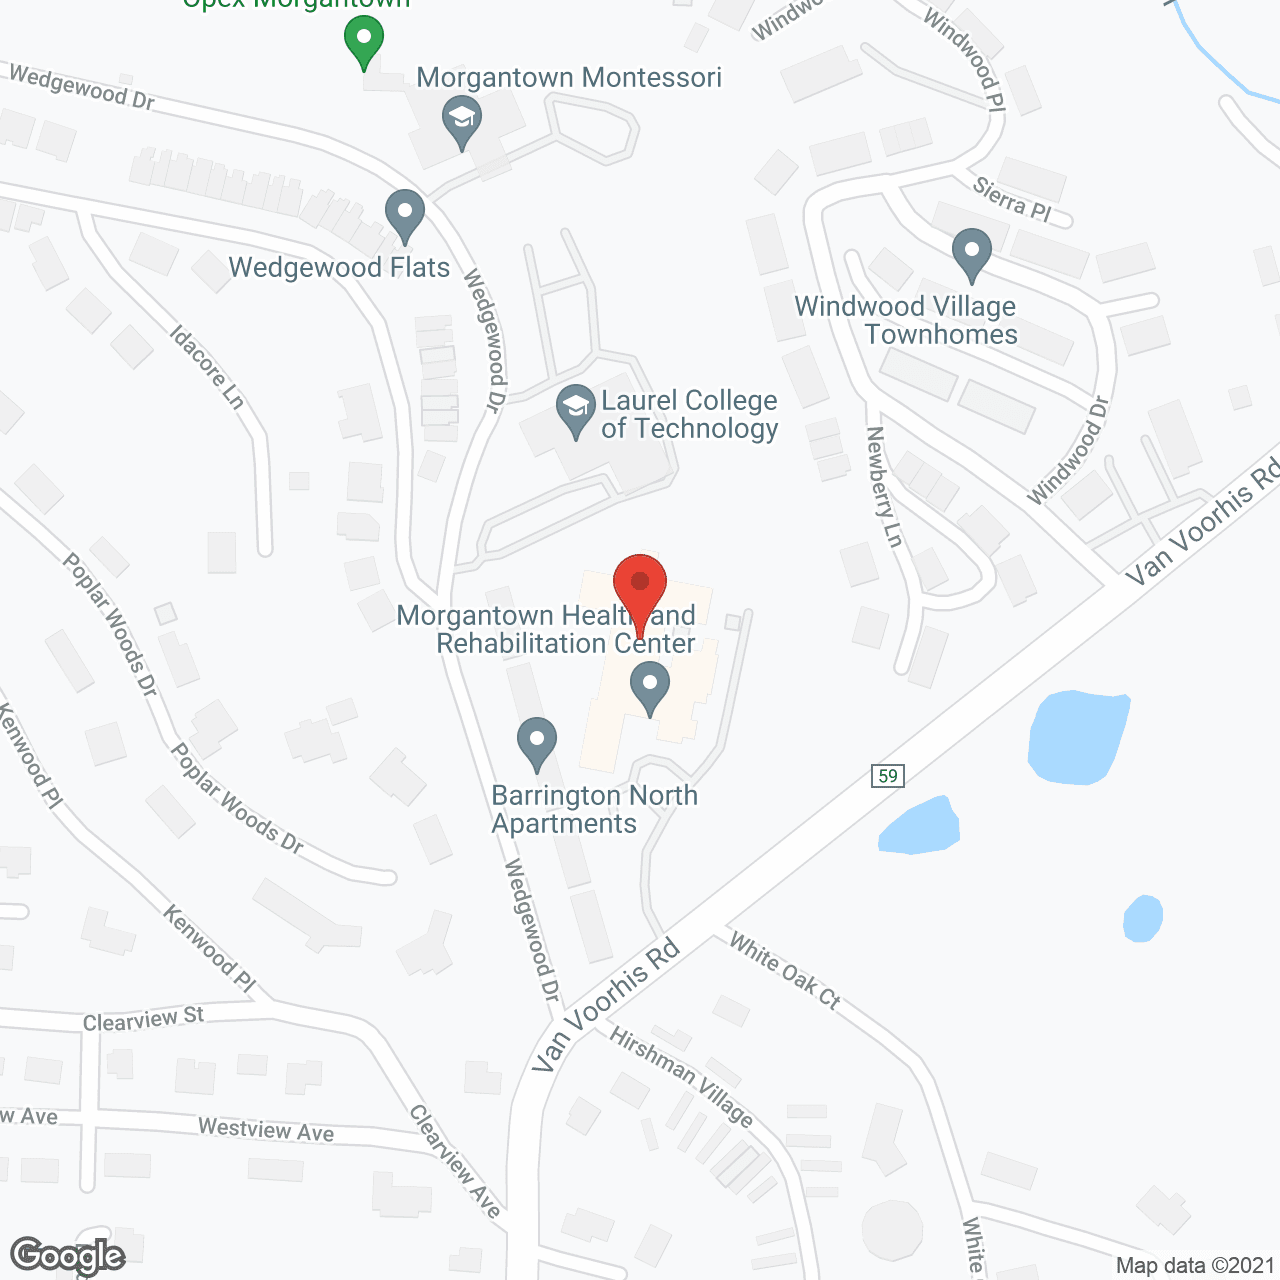 Golden LivingCenter - Morgantown in google map